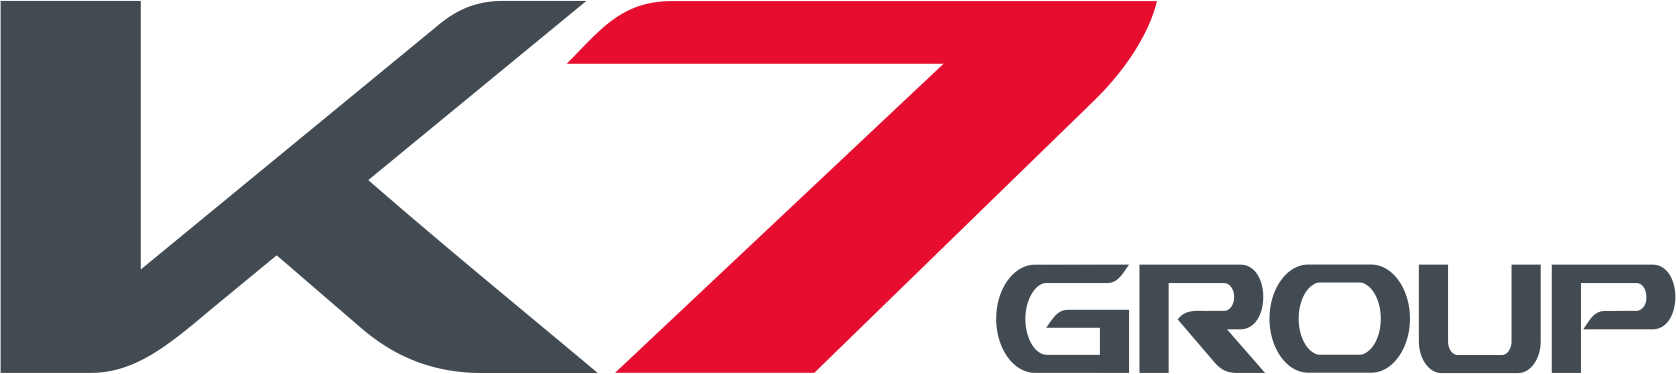 Актобе k7 Group. K7 Group Алматы. K7 Group logo. Группа 7 логотип.